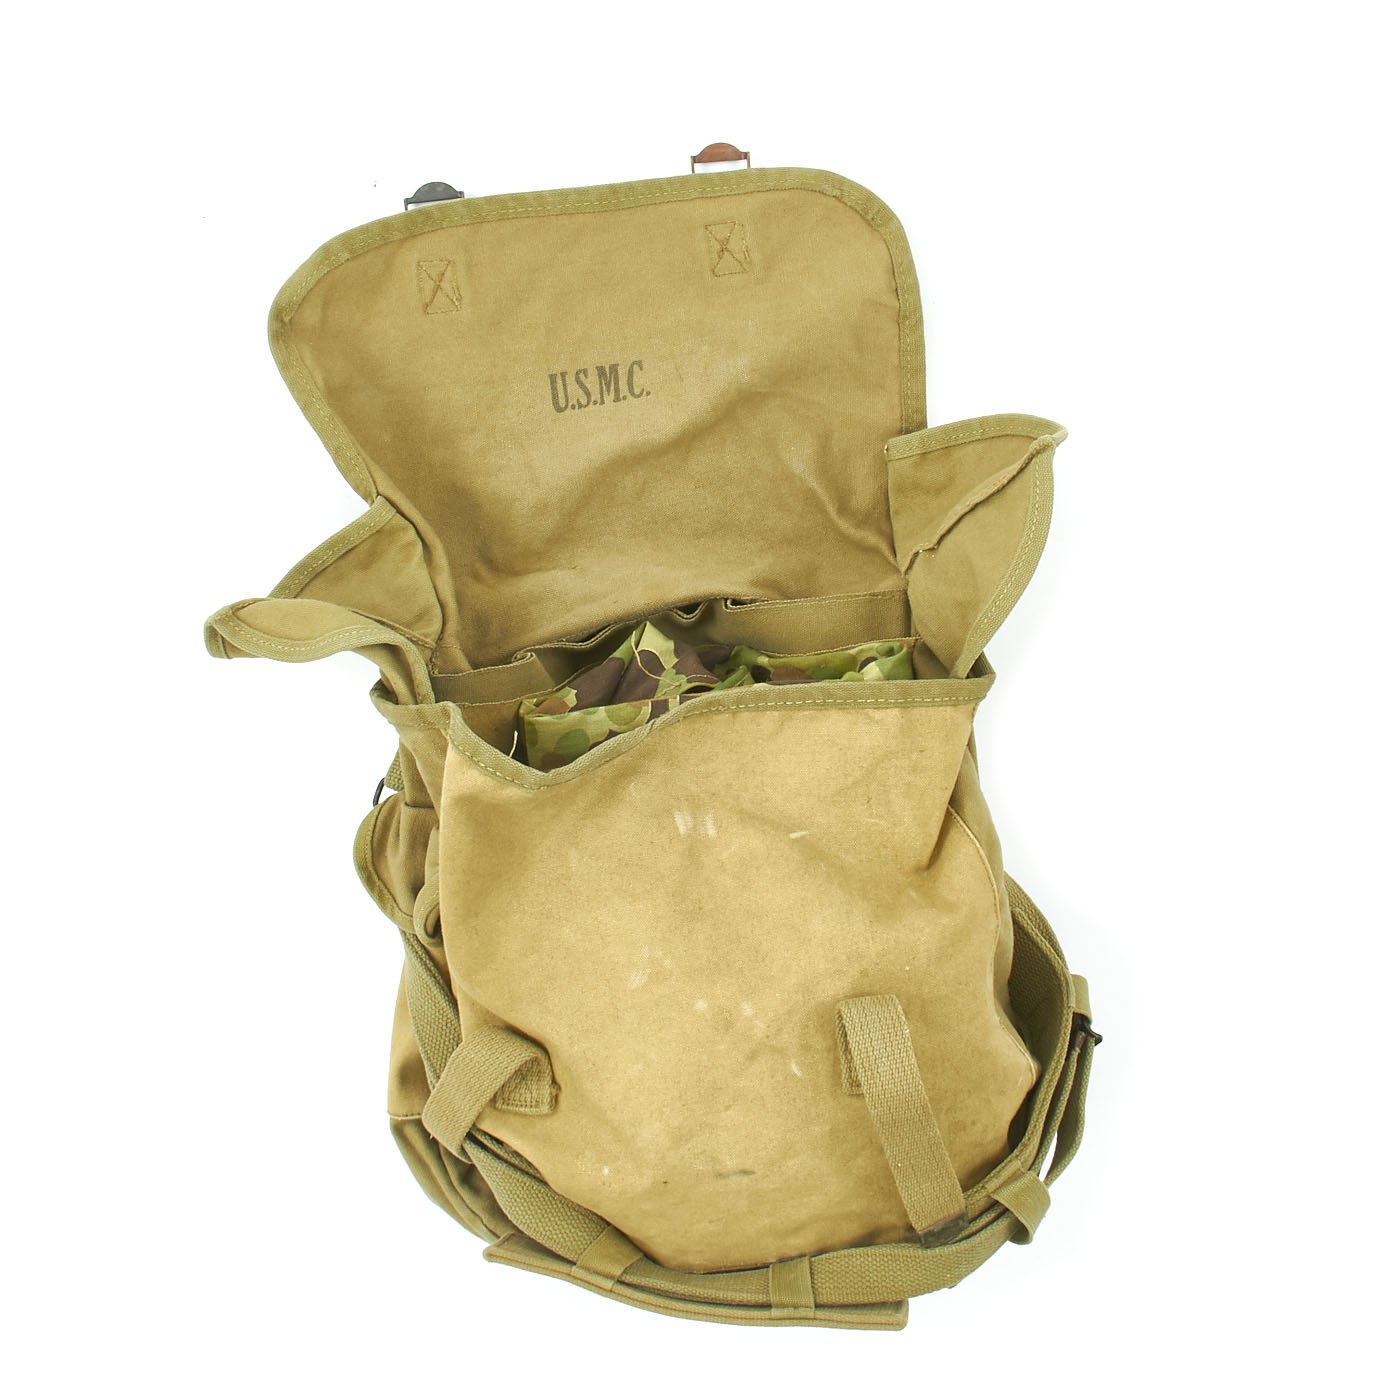 Coleman's Military Surplus Musette Bag